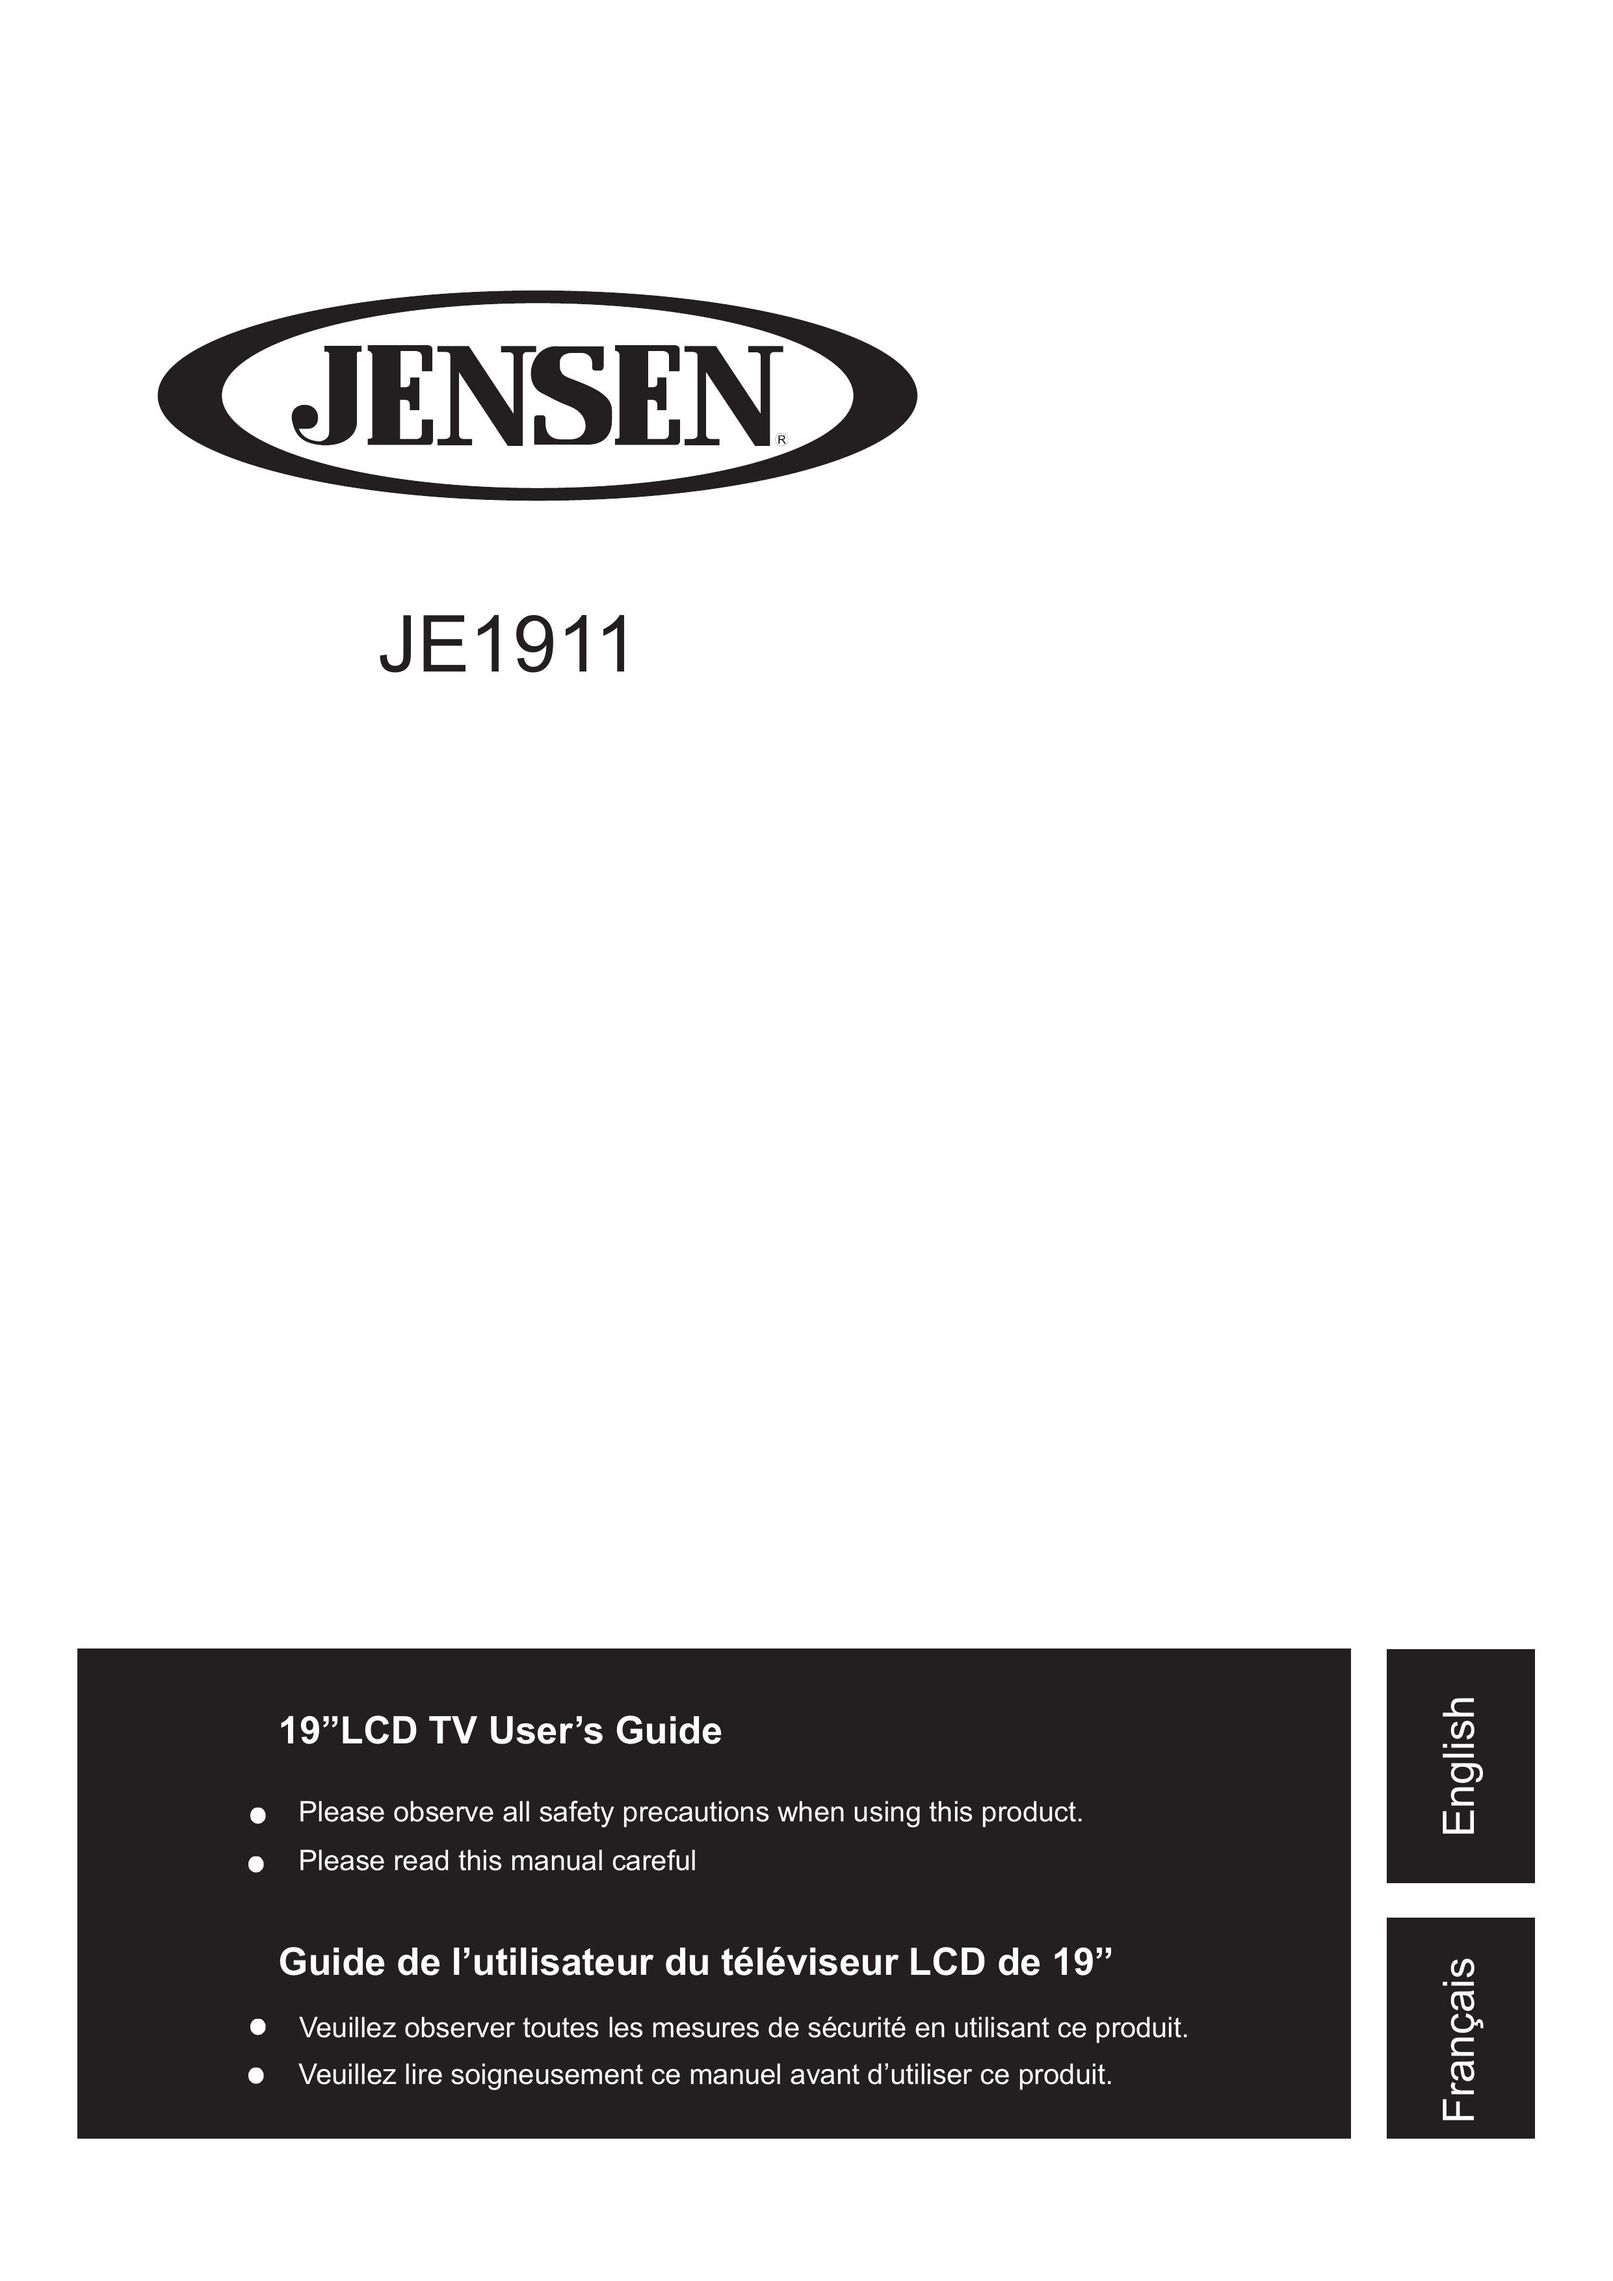 Jensen JE1911 Flat Panel Television User Manual